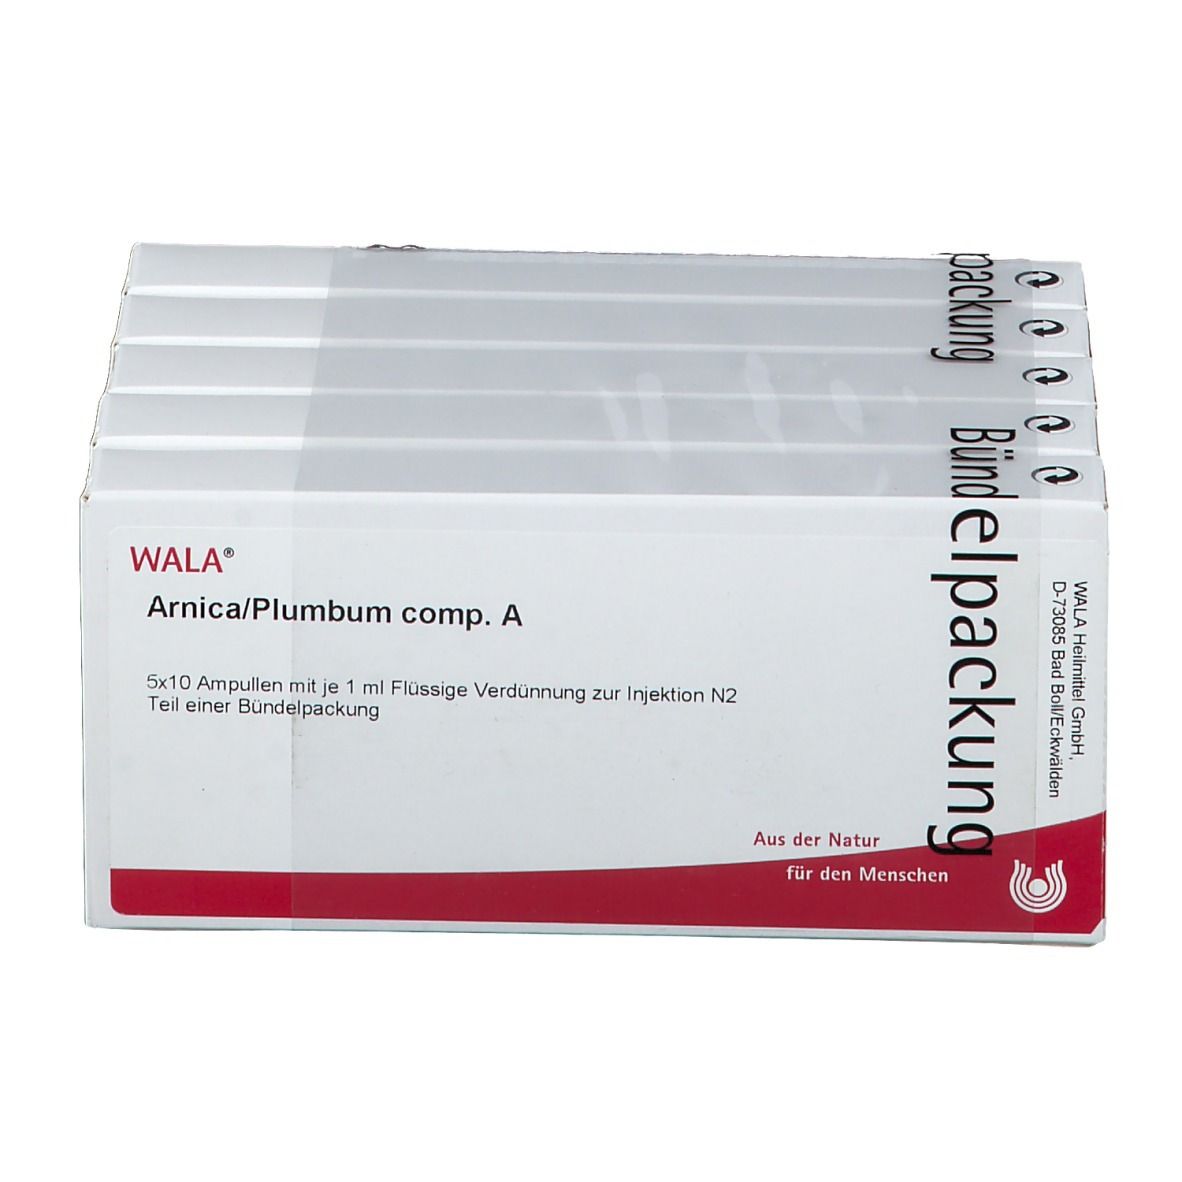 WALA® ARNICA/PLUMBUM comp. A Ampullen